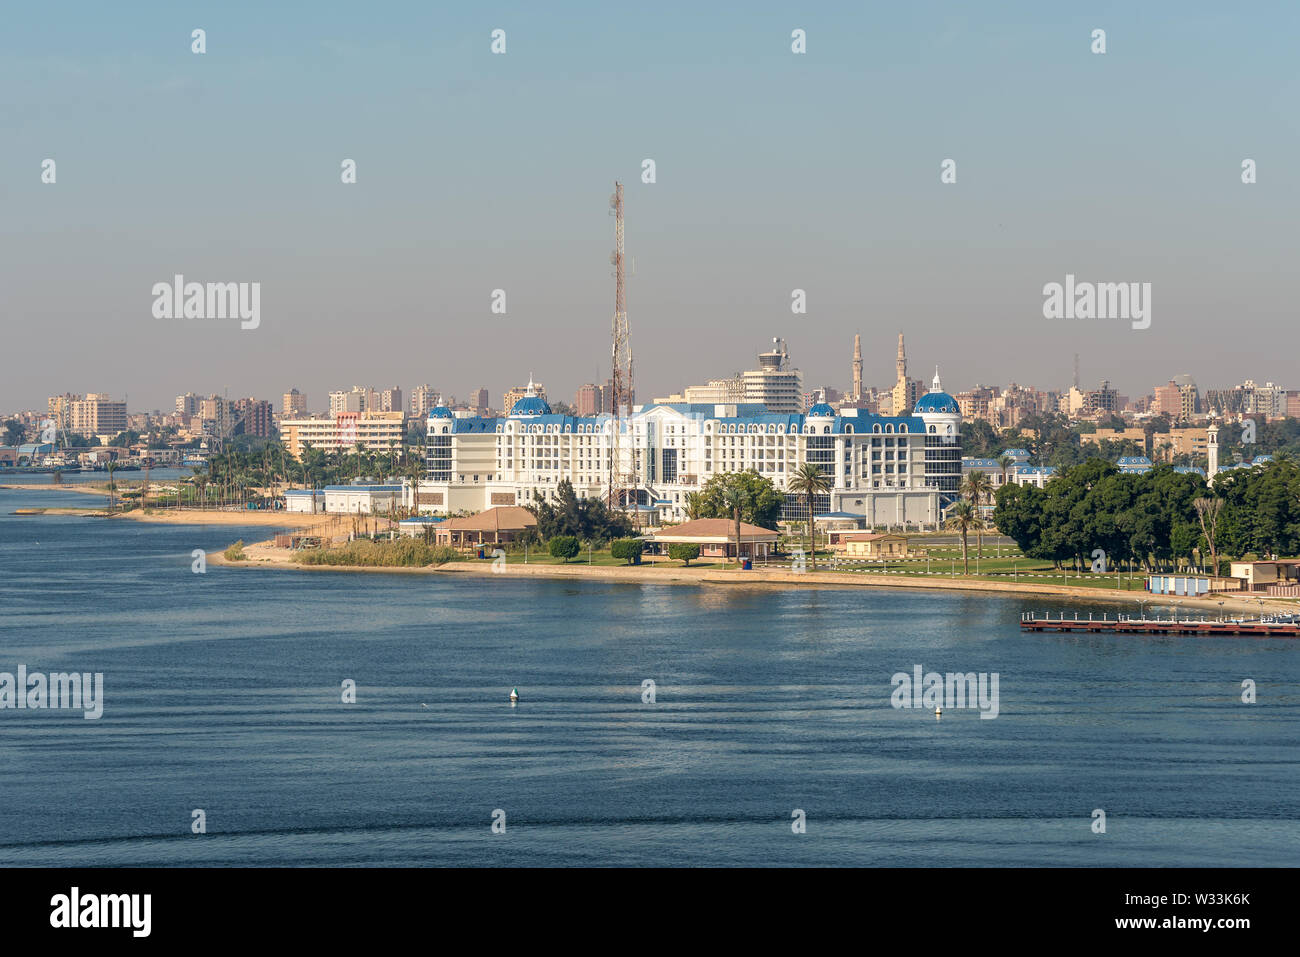 Ismailia, Egypt - November 5, 2017: Tolip El Forsan Hotel on the Lake Timsah lies along the path of the Suez canal, Ismailia, Egypt, Africa. Stock Photo